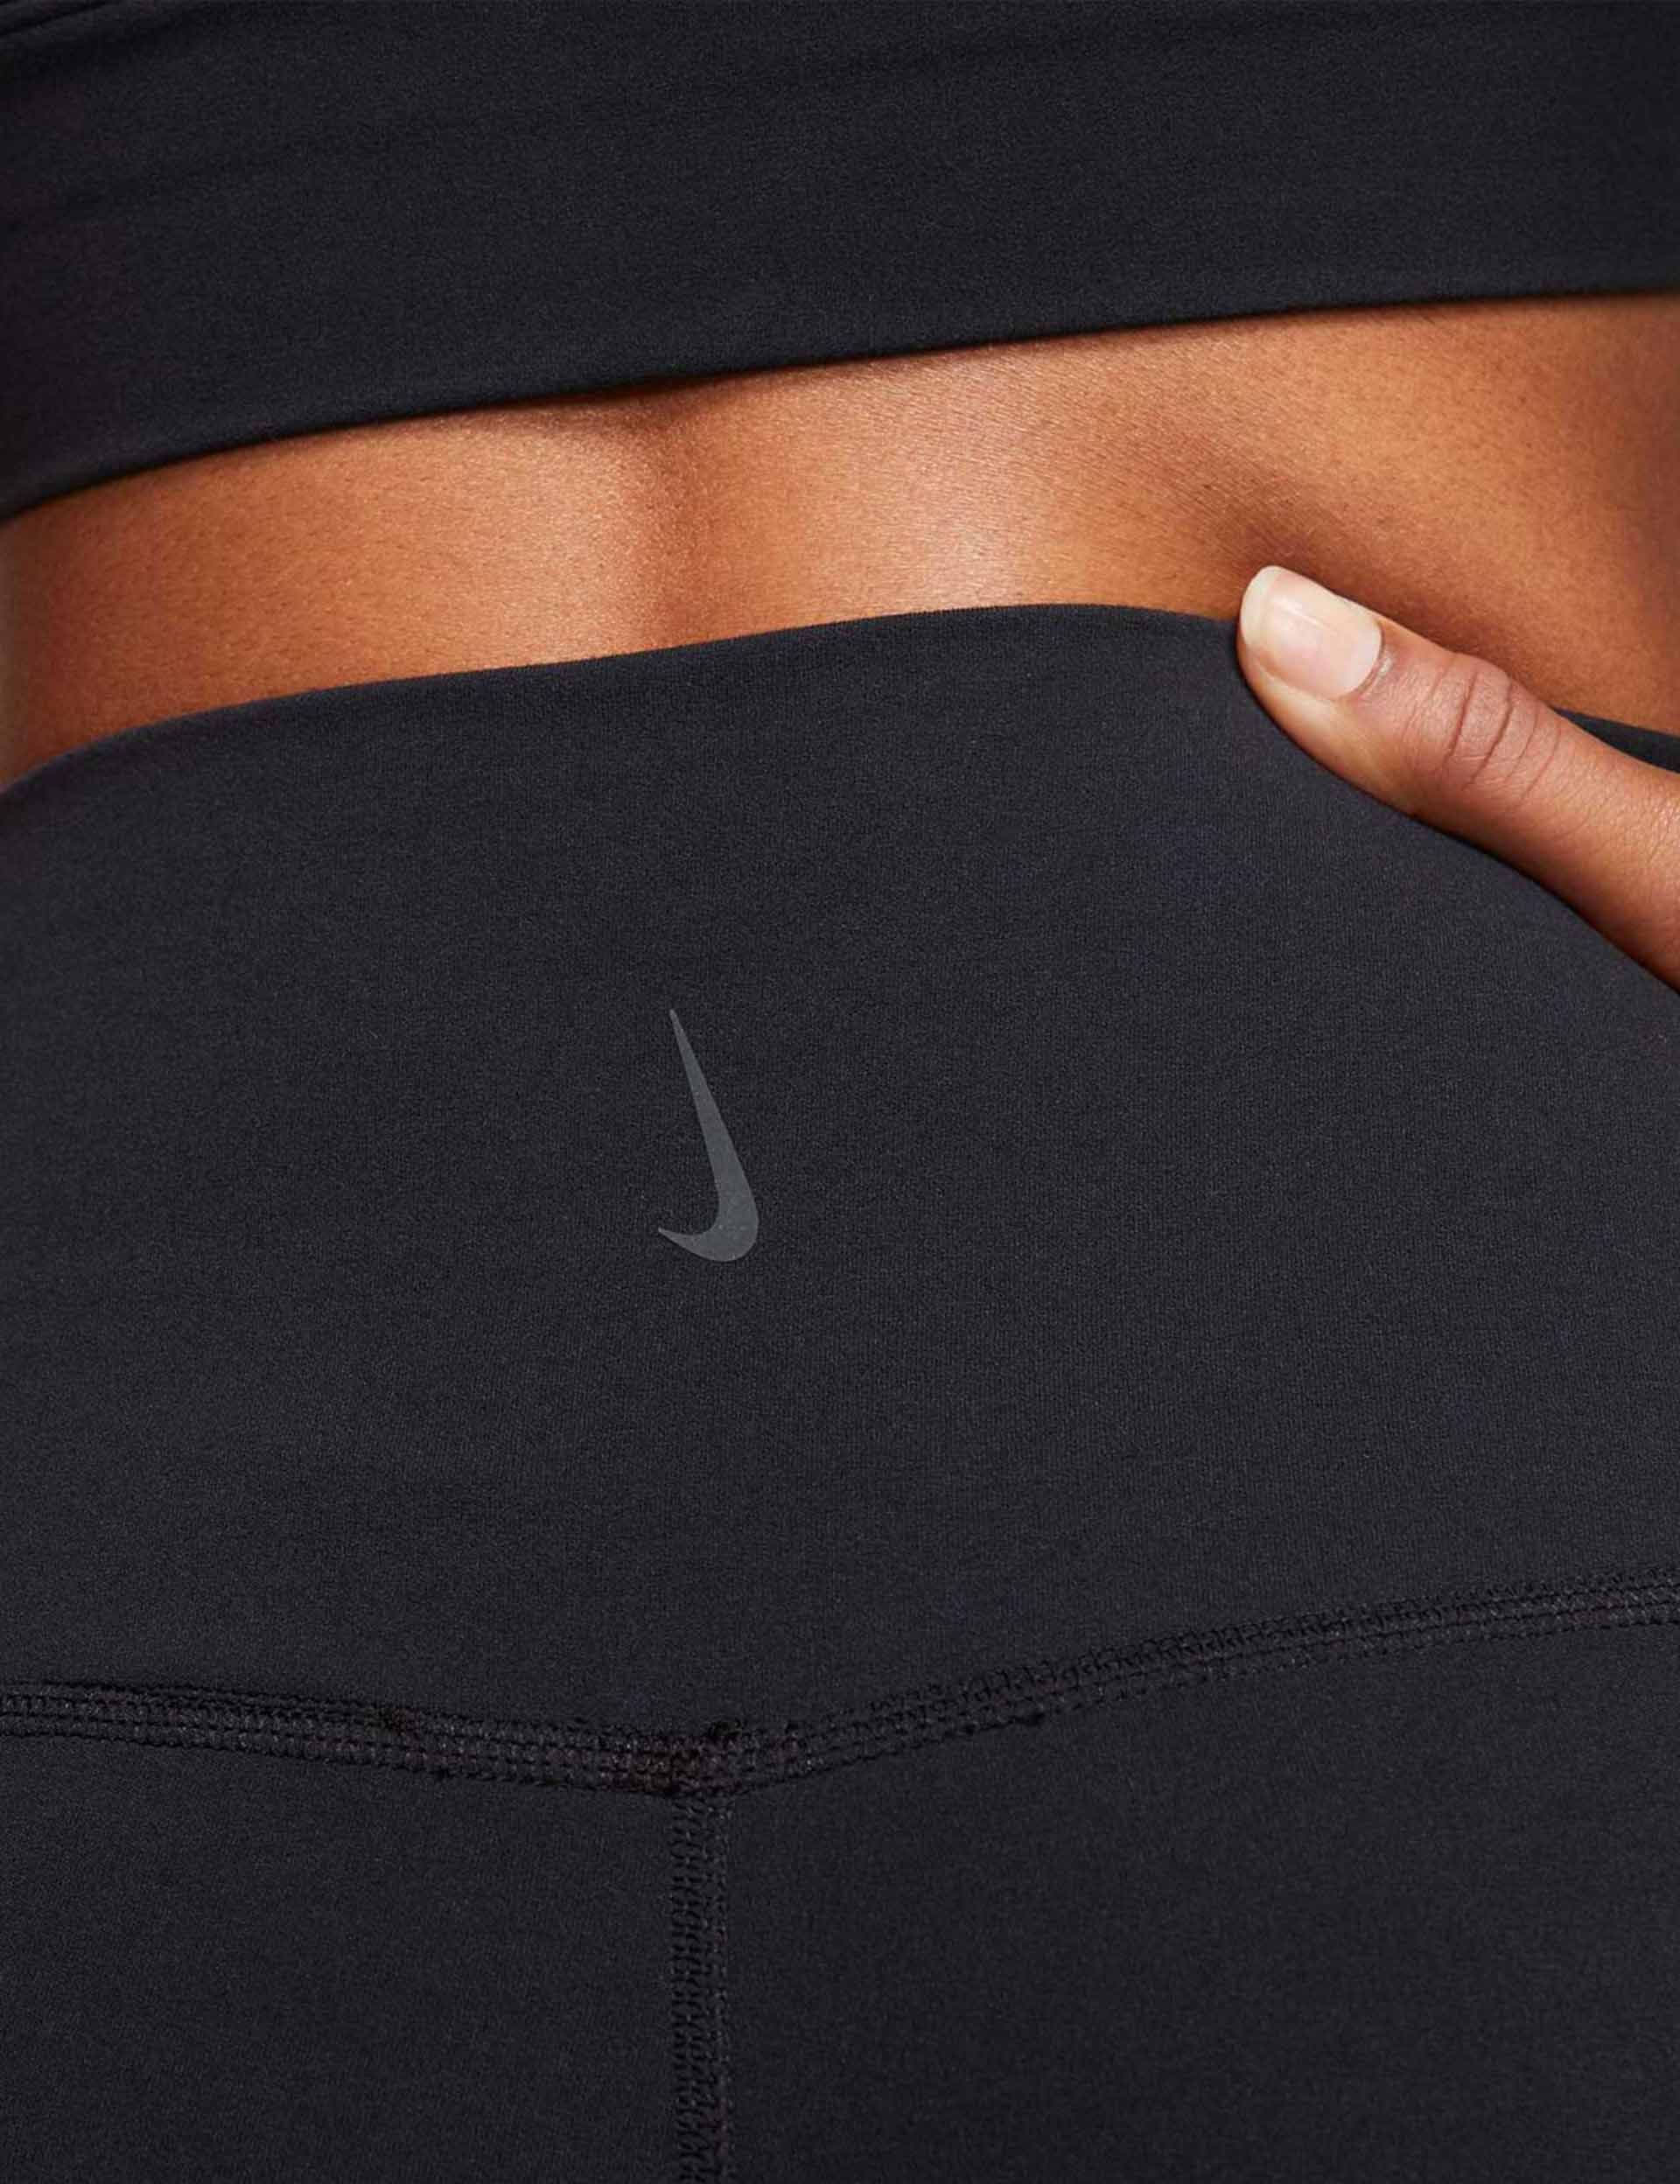 Nike Yoga Luxe 7/8 Leggings - Black/Dark Smoke Greyimage5- The Sports Edit